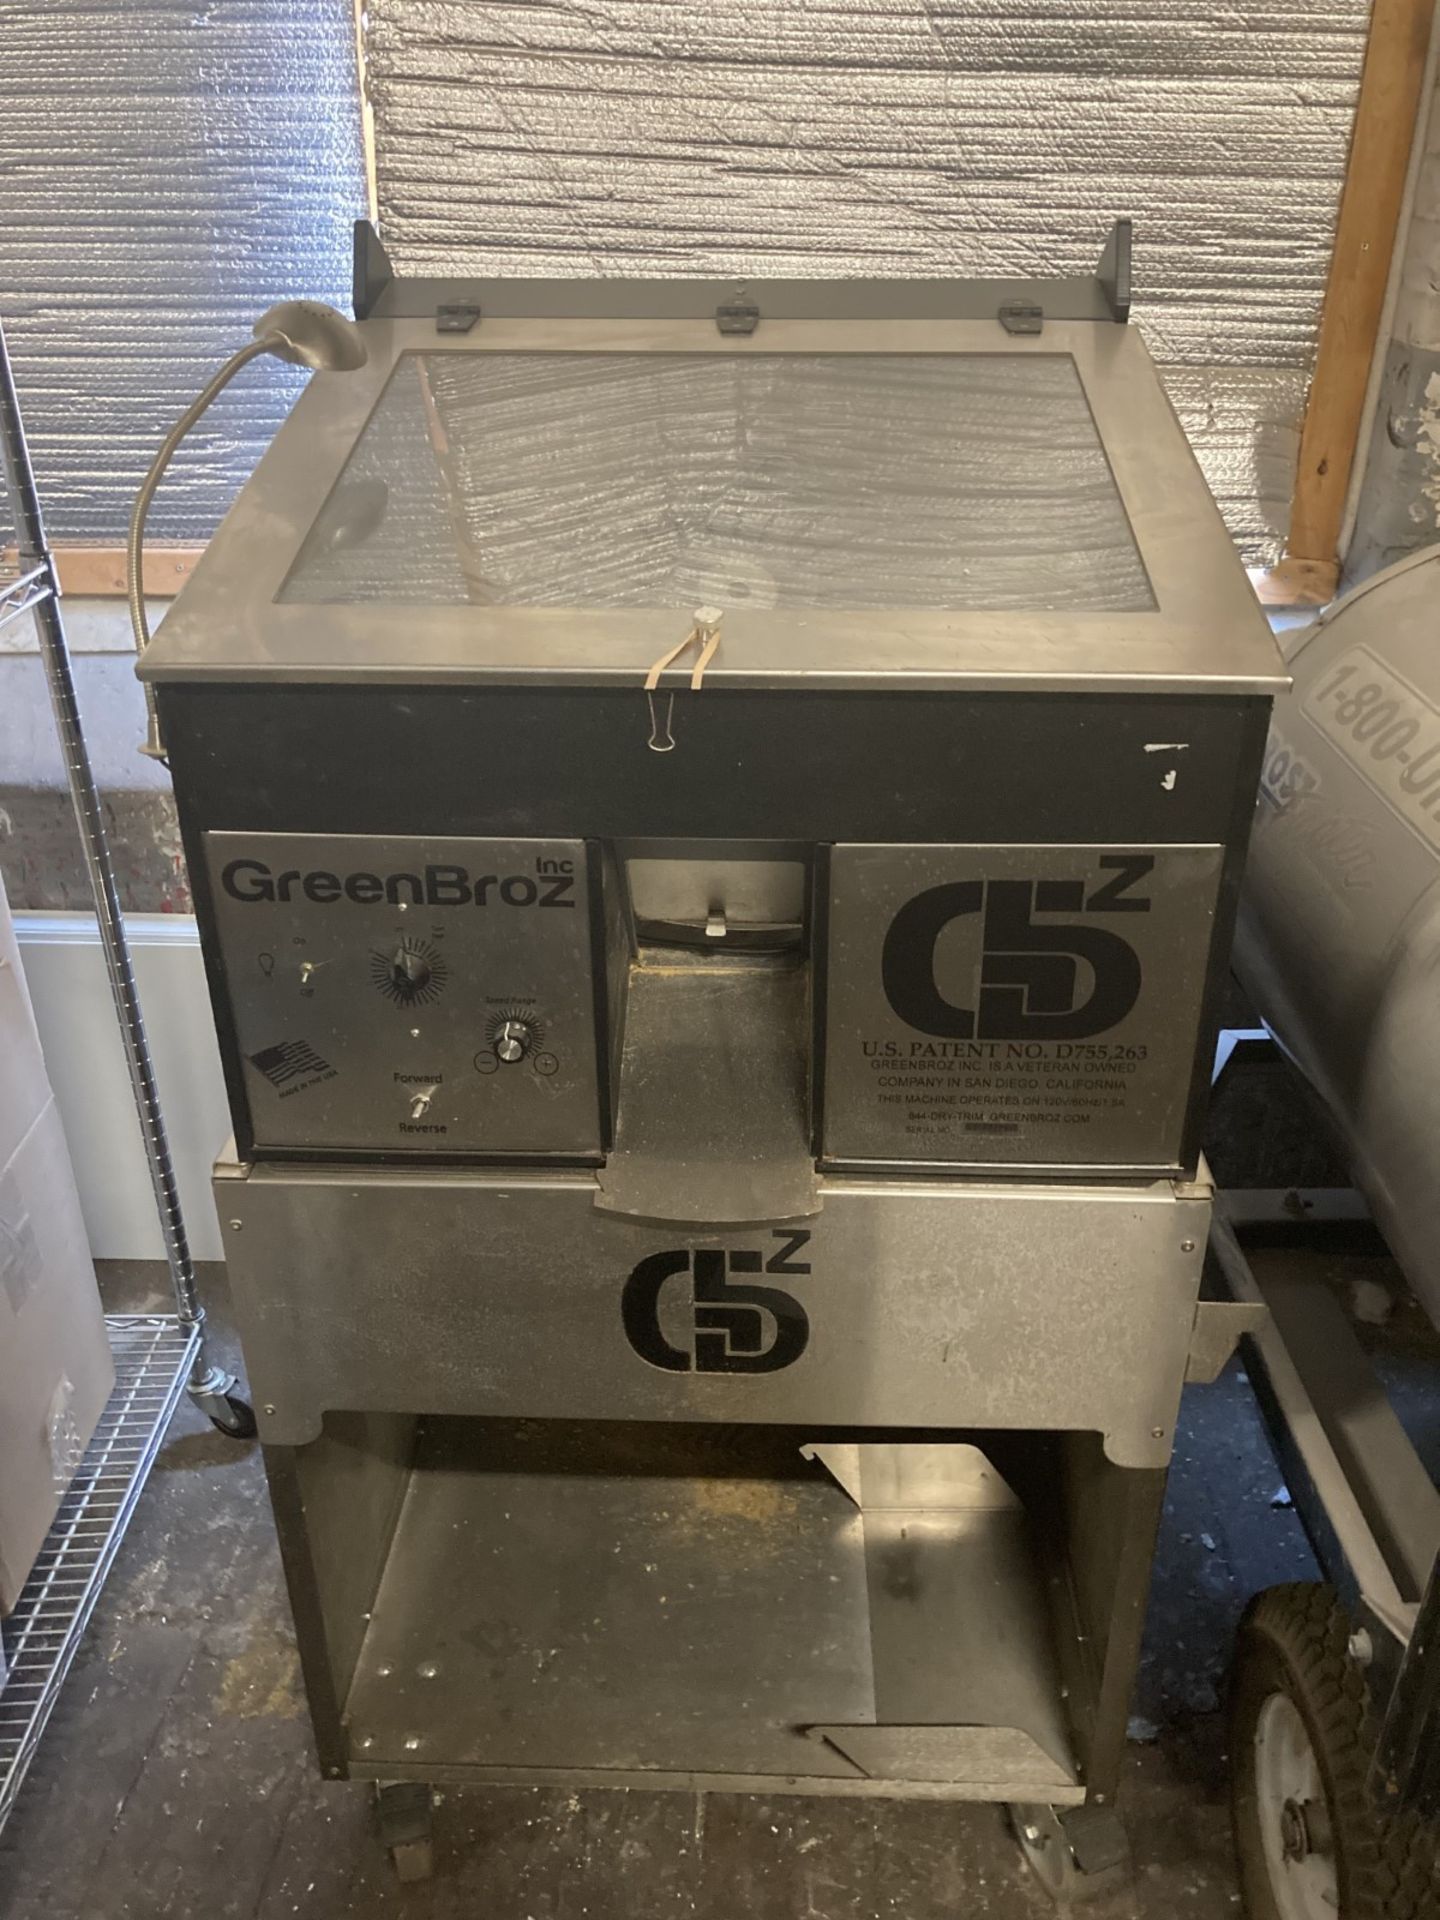 GreenBroz 215 Automatic Dry Bud Trimming Machine